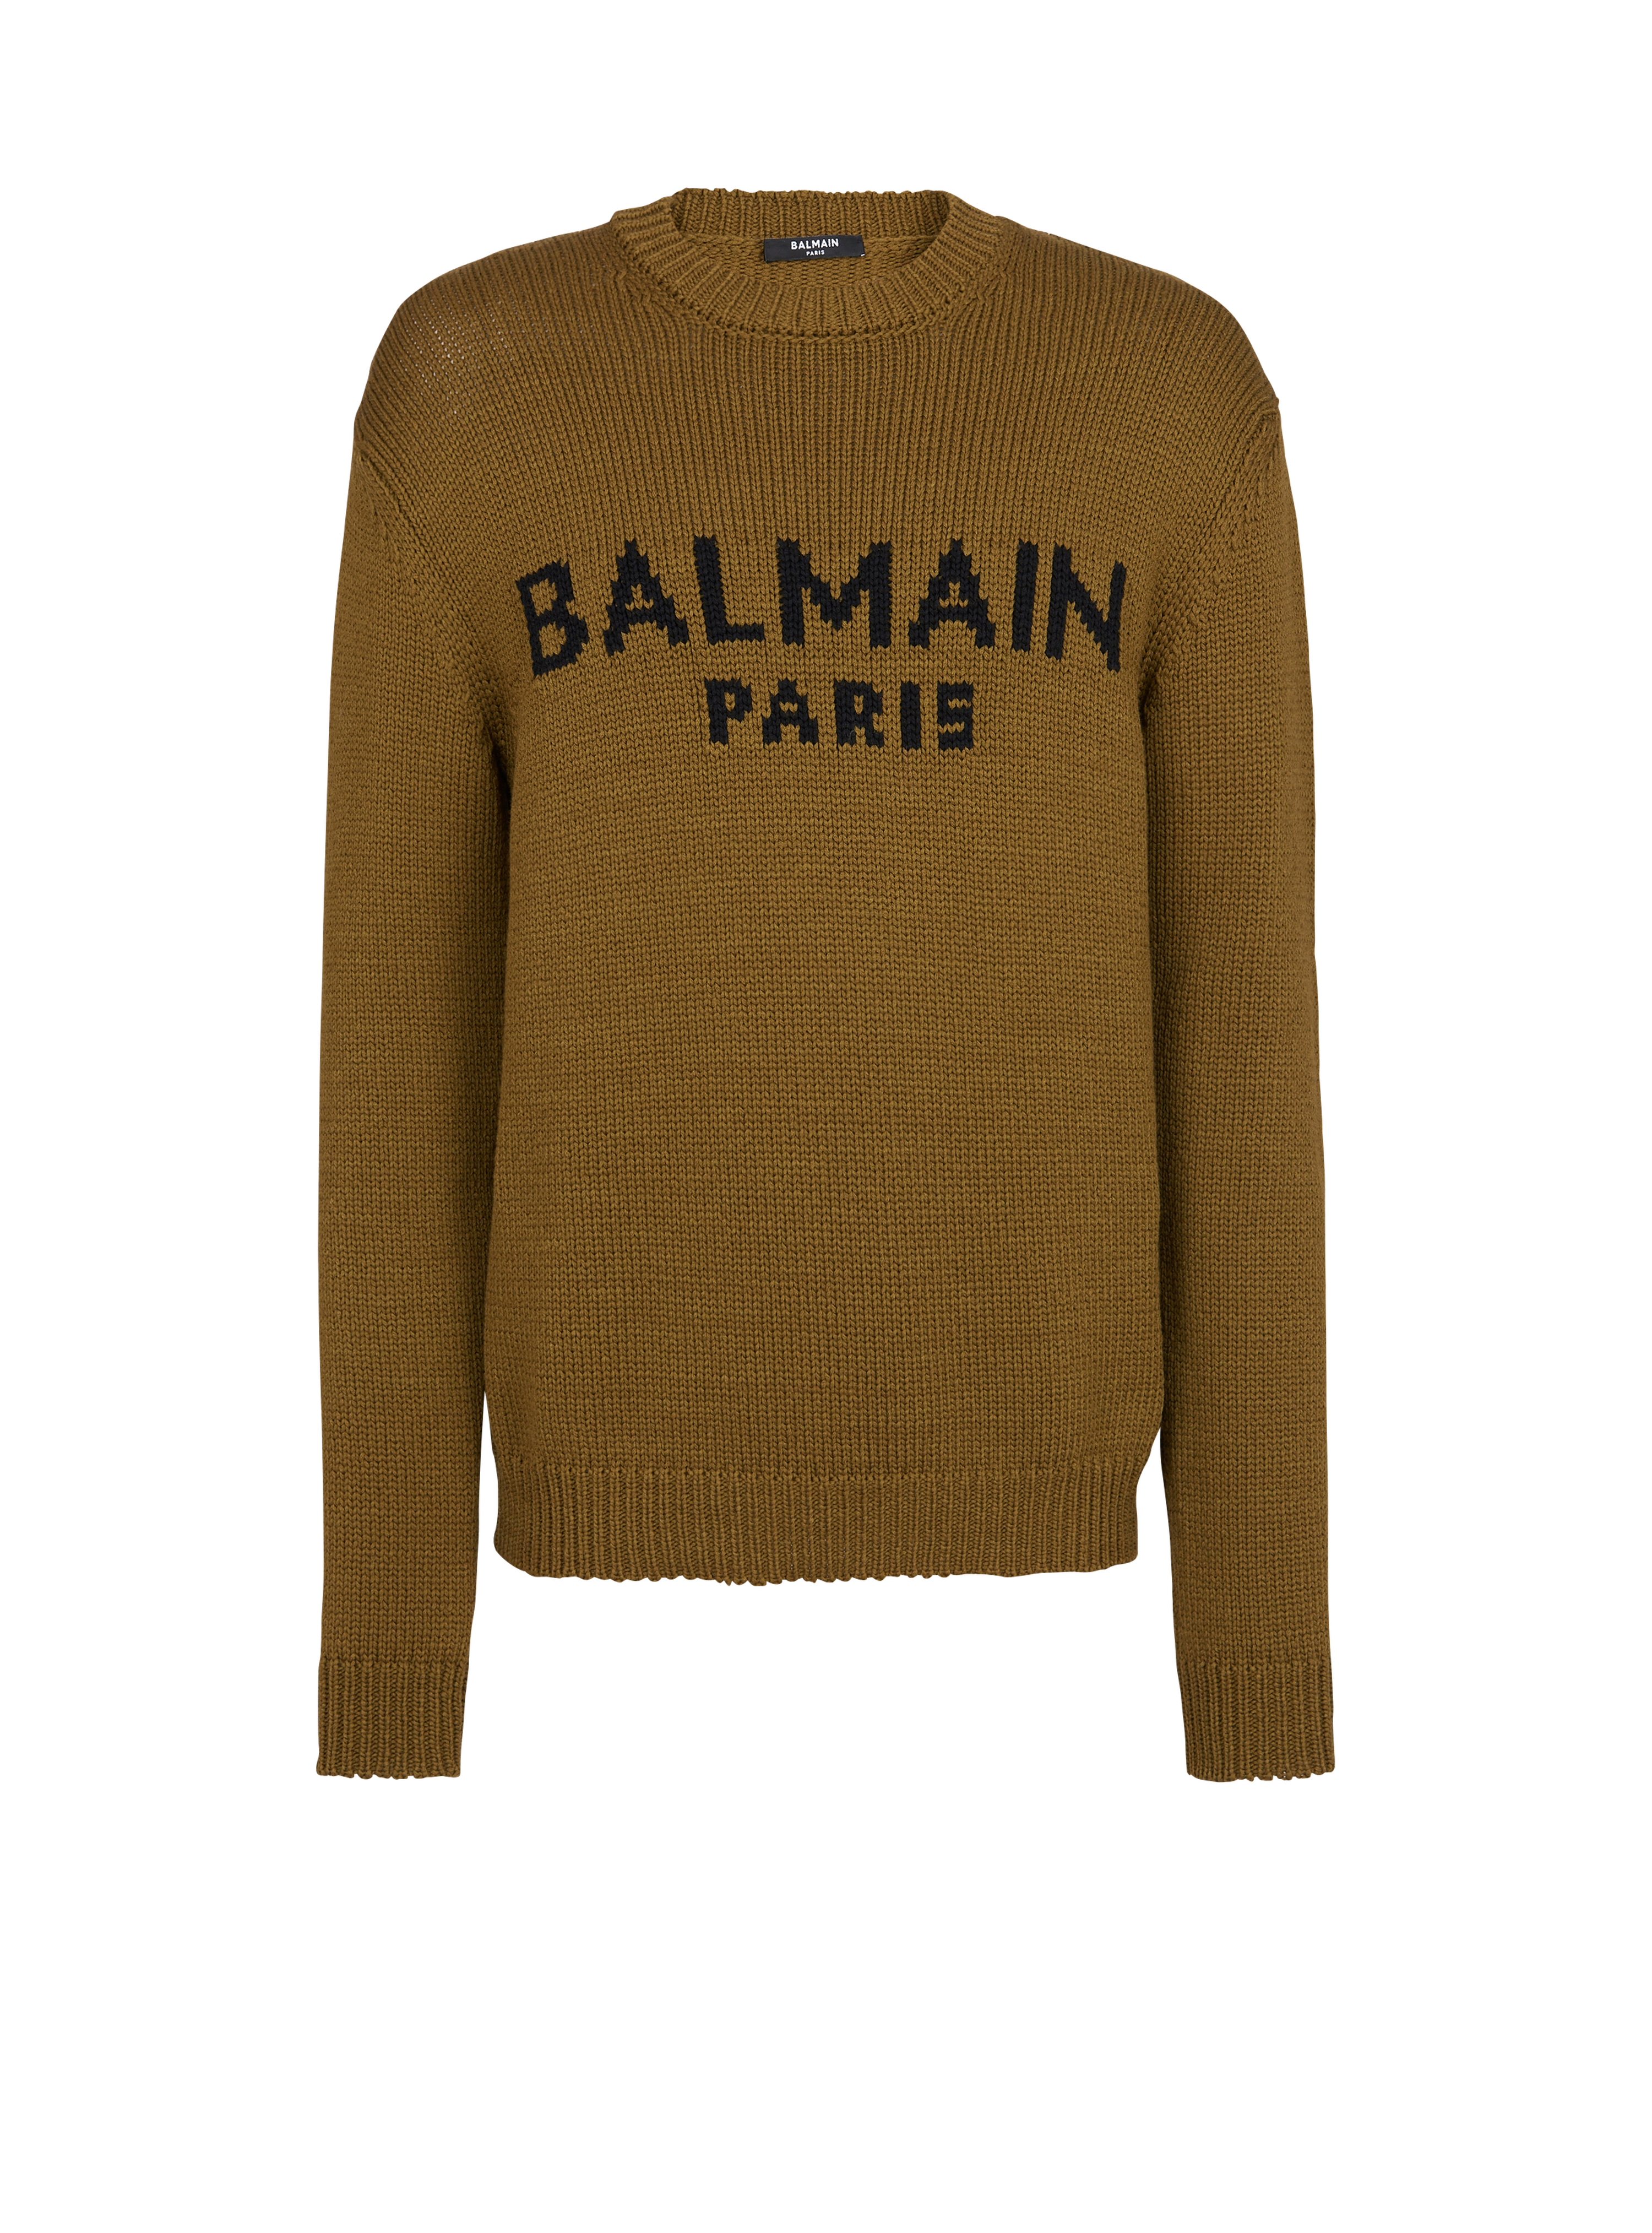 Wool jumper with Balmain logo, khaki